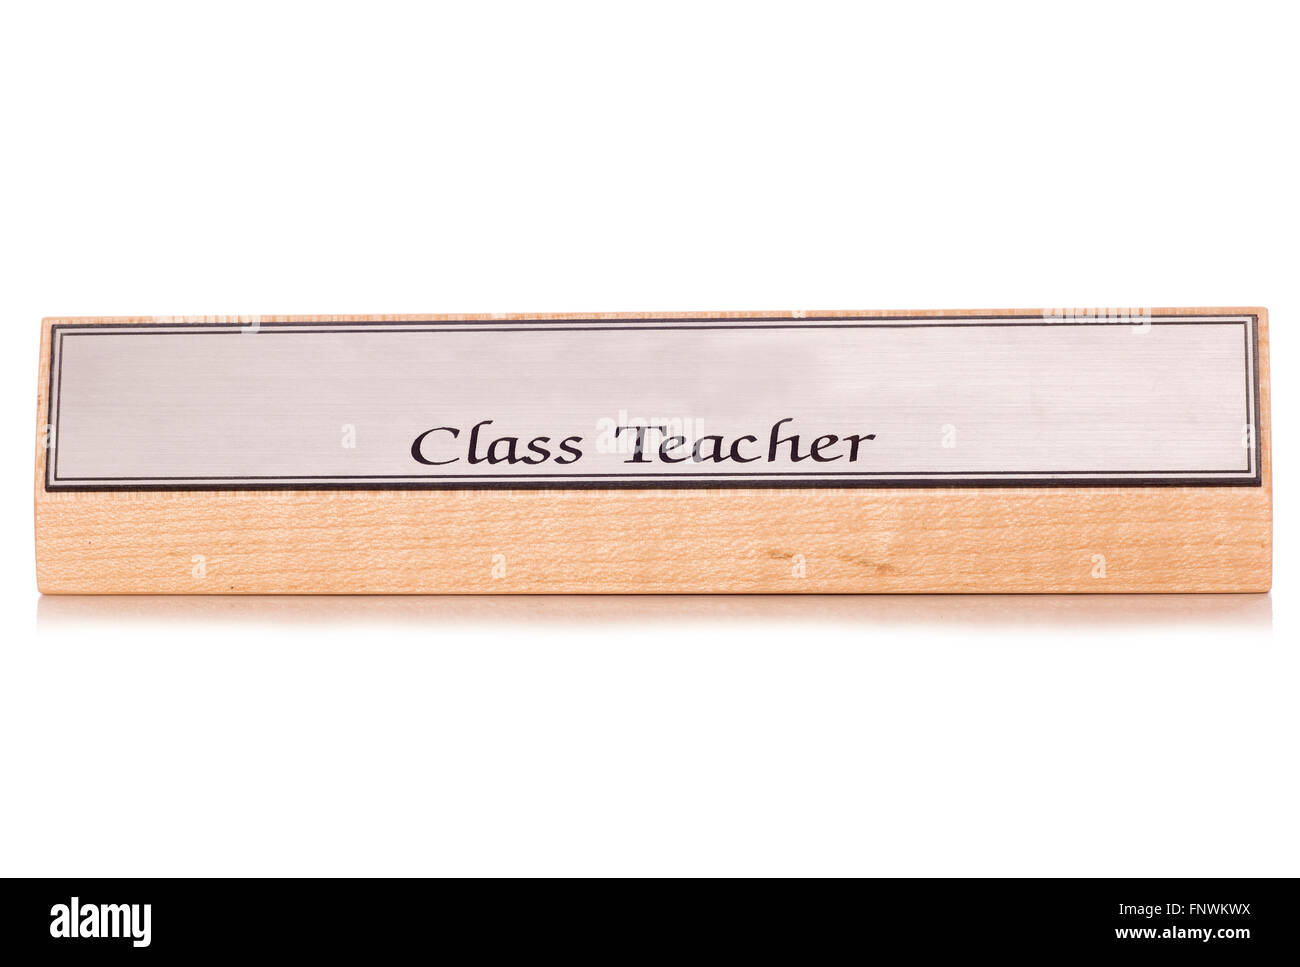 Class Teacher Desk Name Plate Studio Cutout Stock Photo 99524038